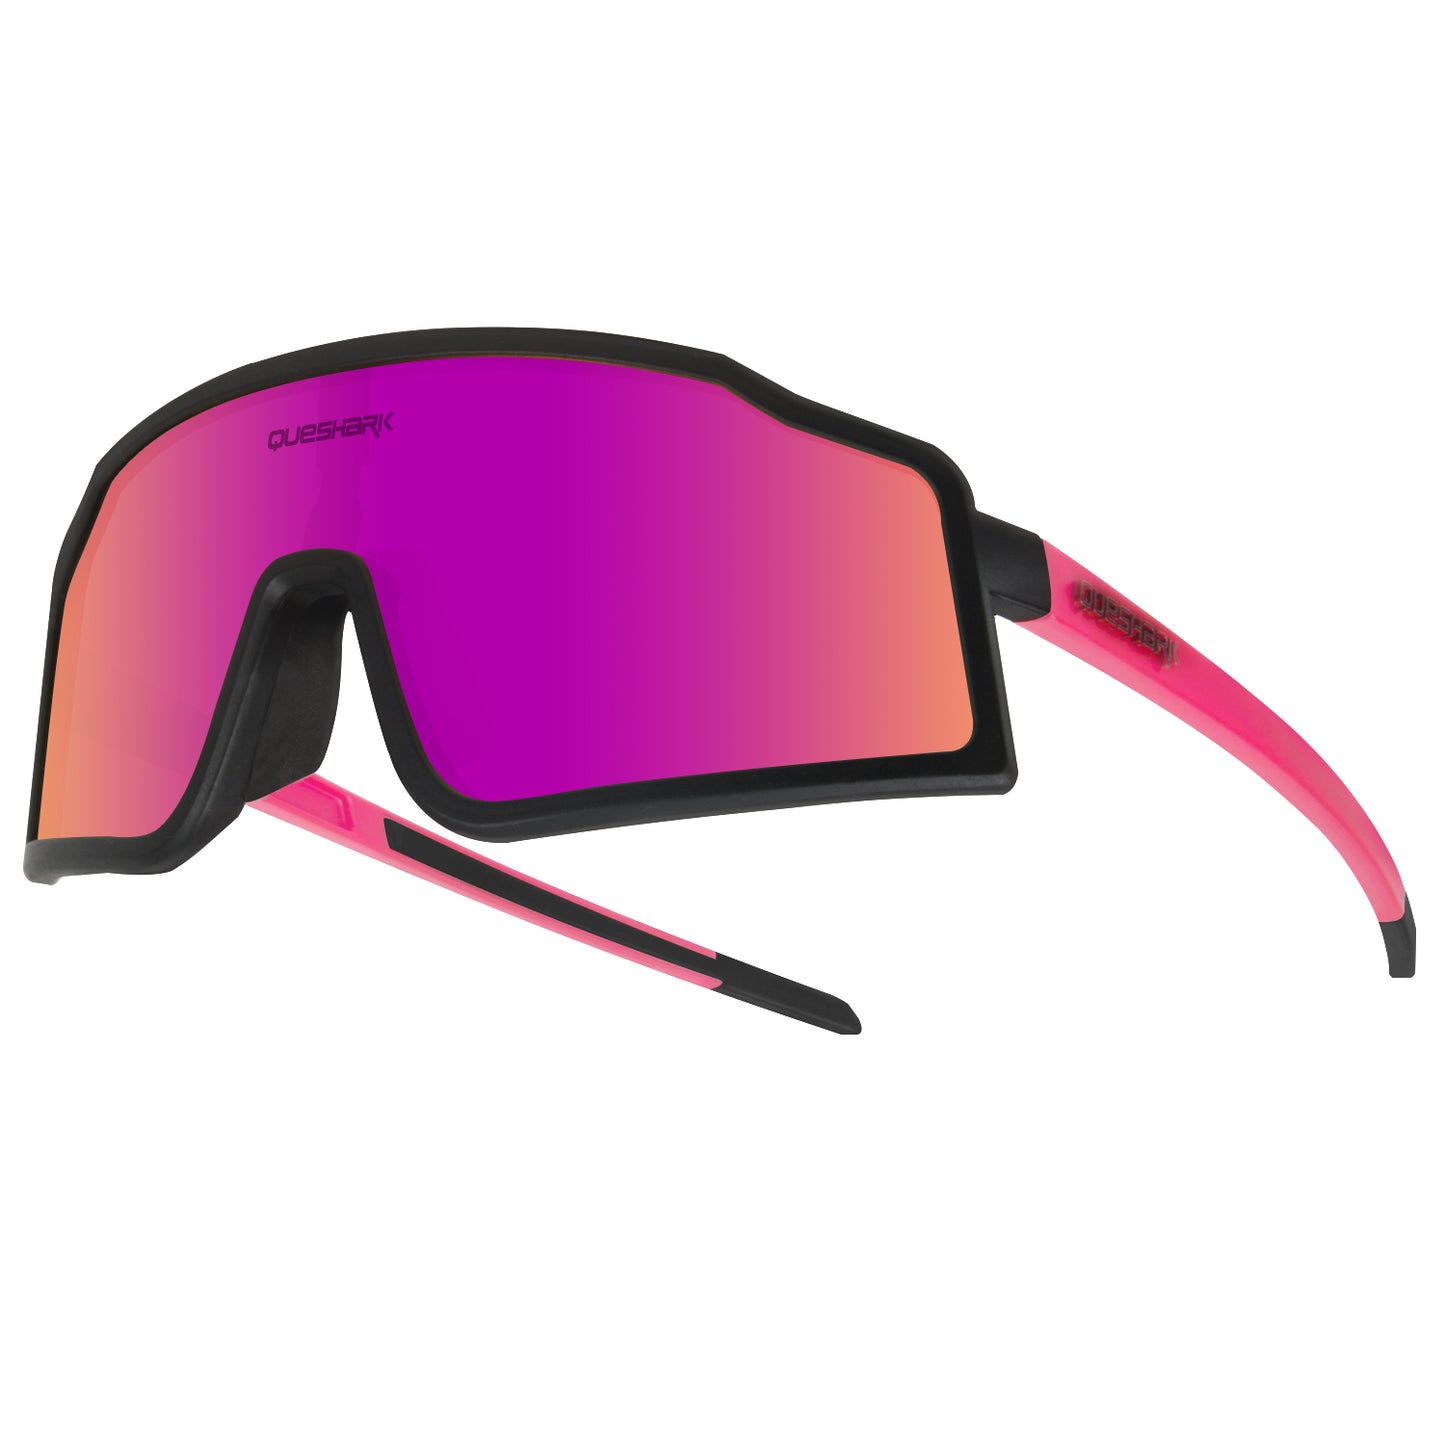 <transcy>QE54 Negro Rosa Gafas deportivas Gafas de sol polarizadas para bicicleta Gafas de ciclismo 3 lentes / juego</transcy>